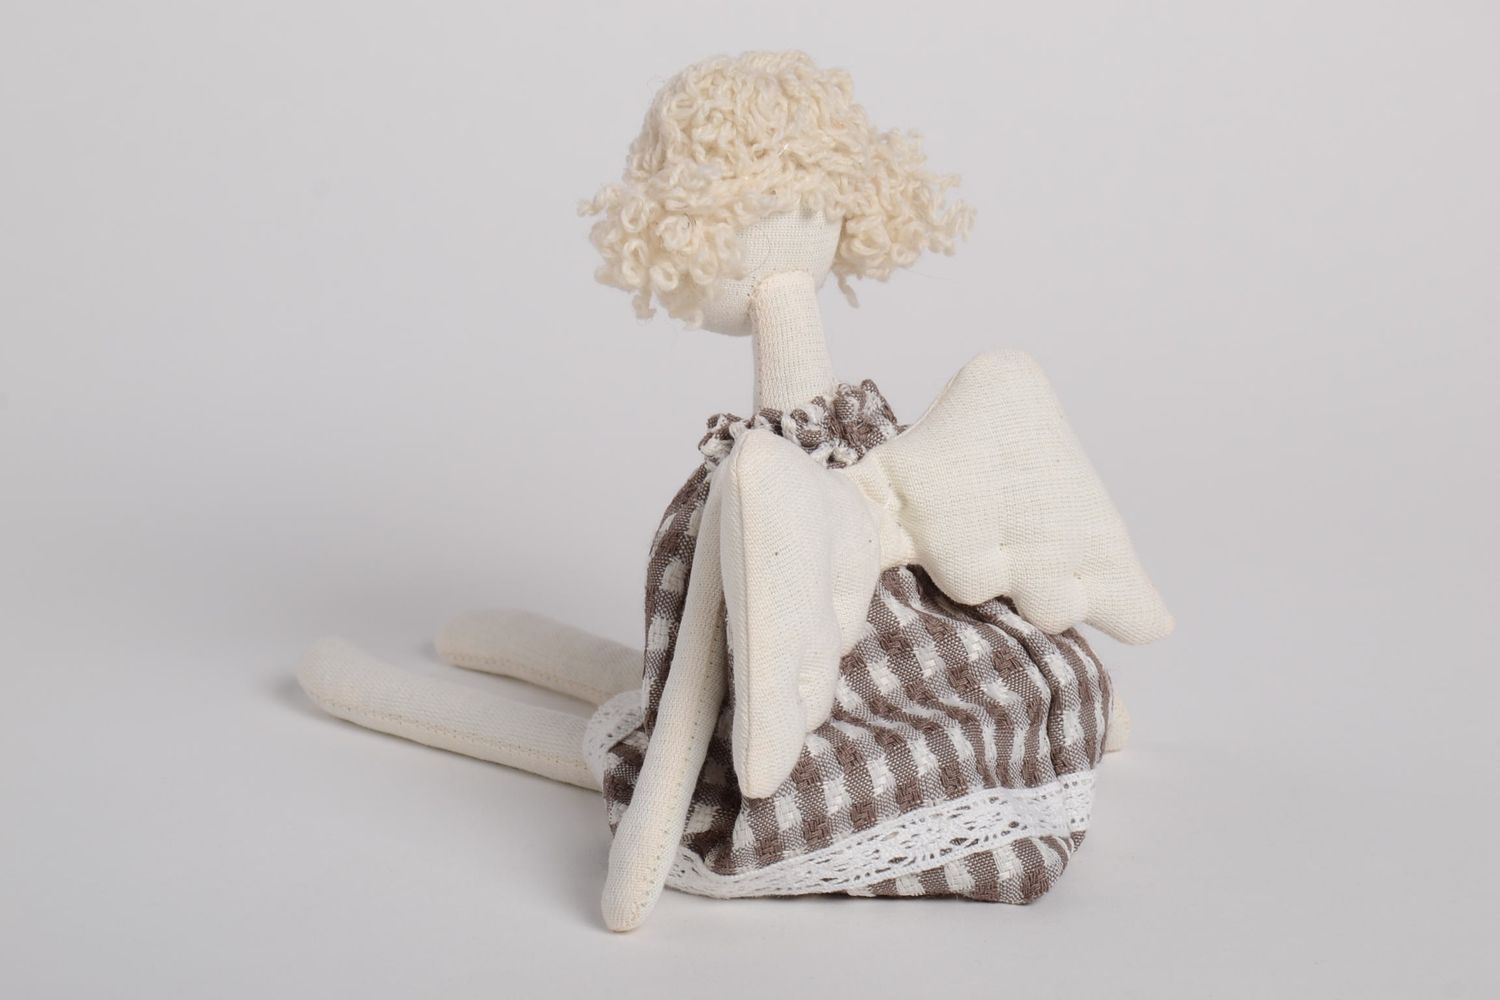 Soft doll handmade stuffed toy for children nursery decor ideas home decor photo 4